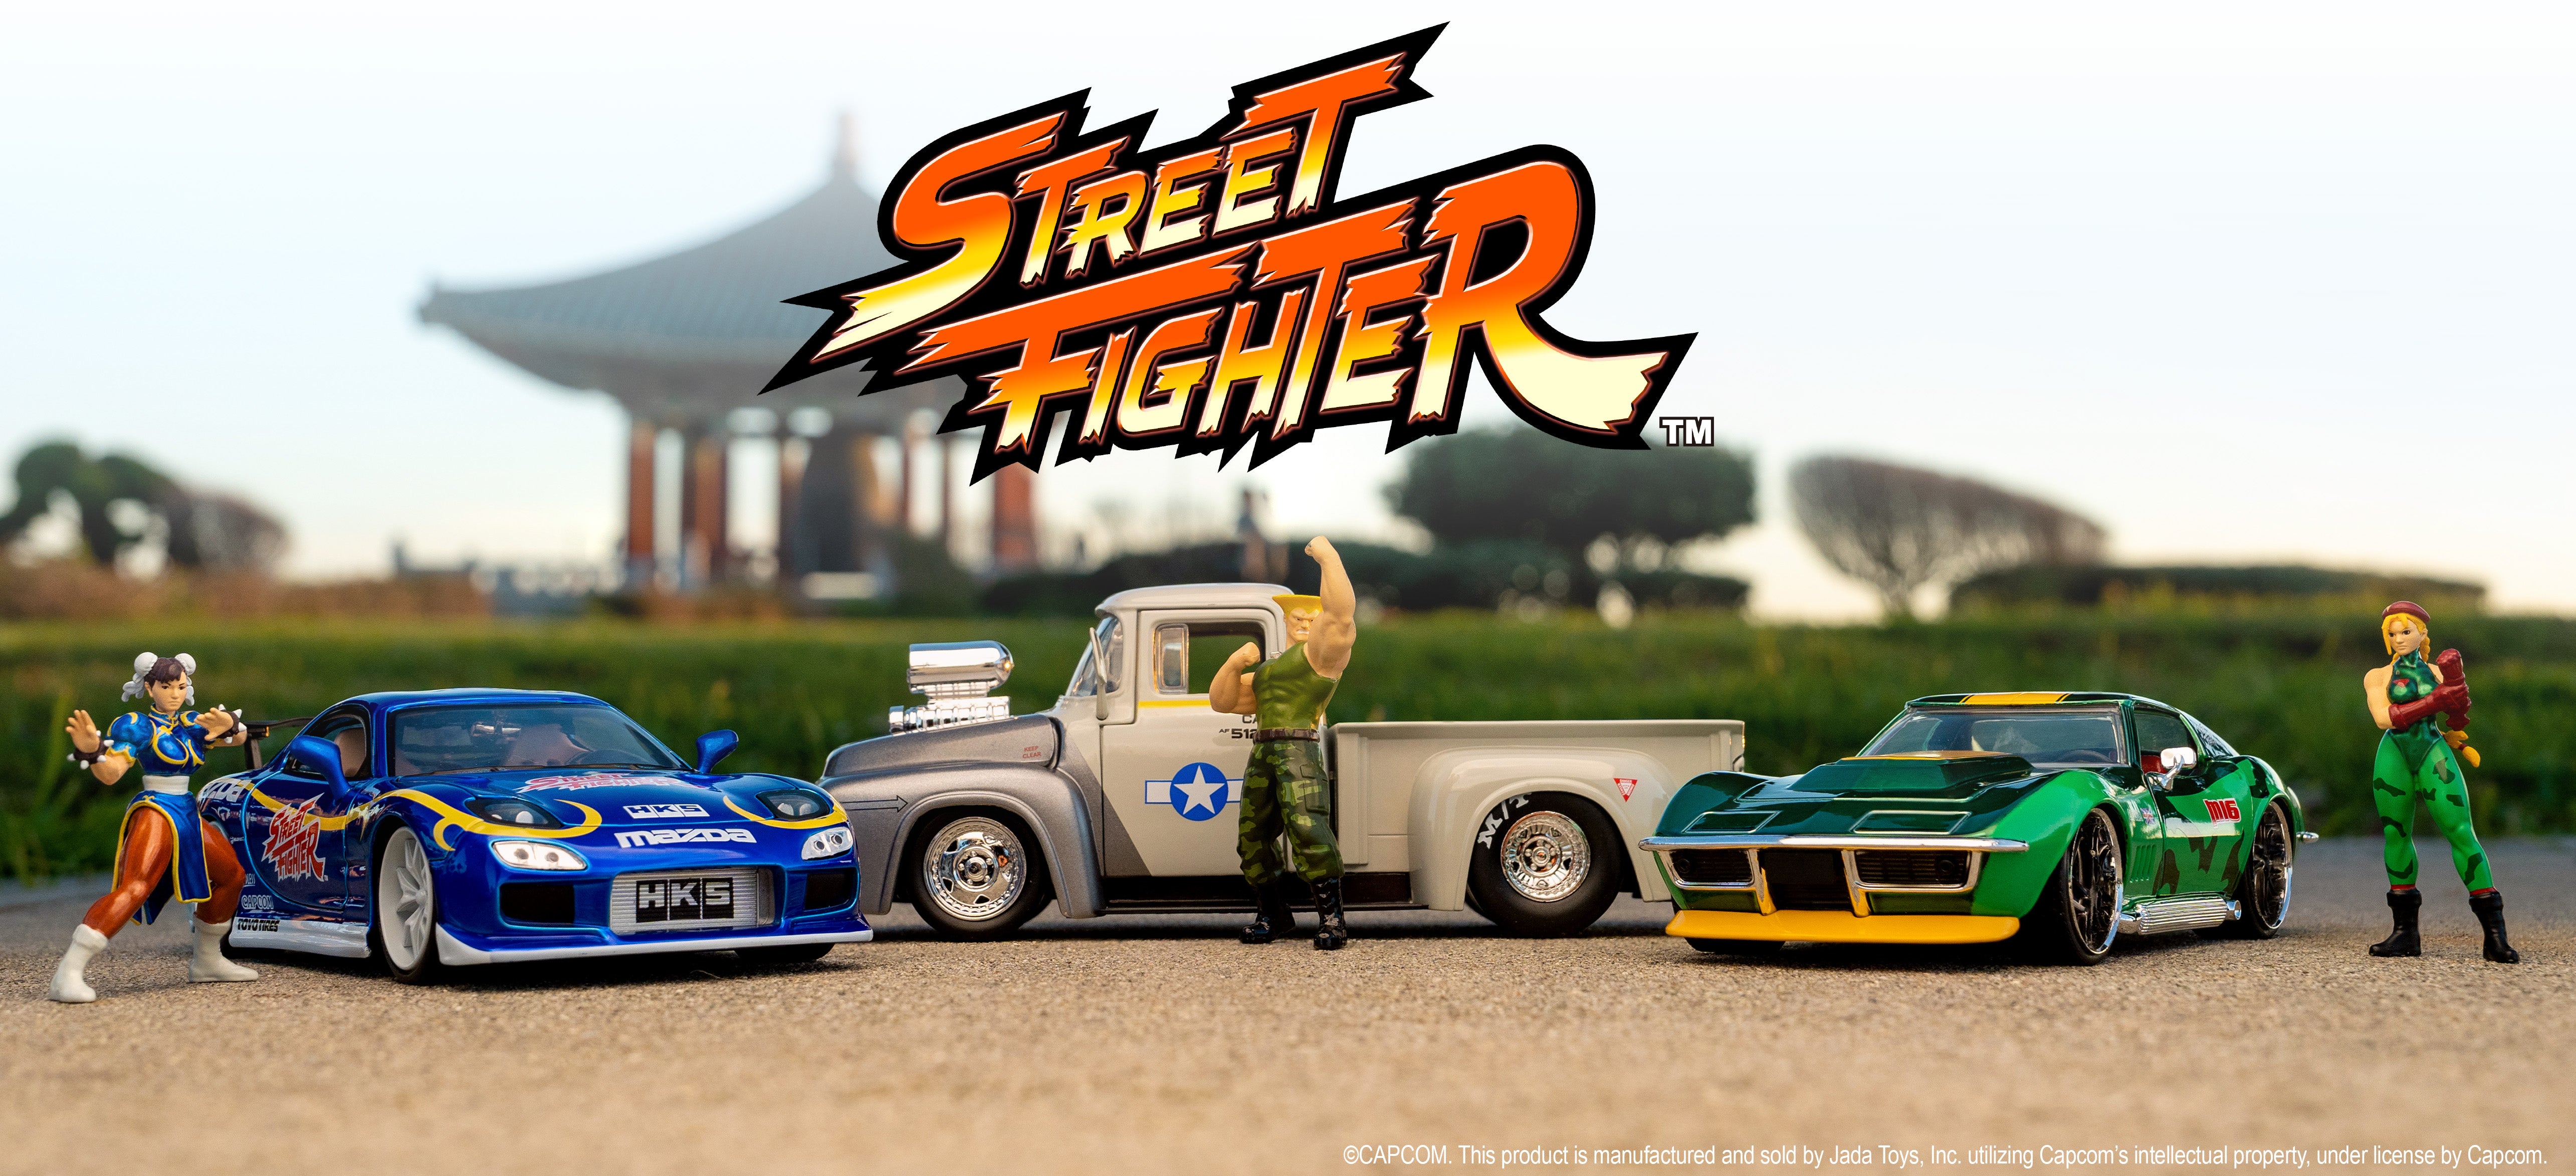 Street Fighter, Chun-Li & 1993 Mazda RX-7, 1:24 Scale Vehicle